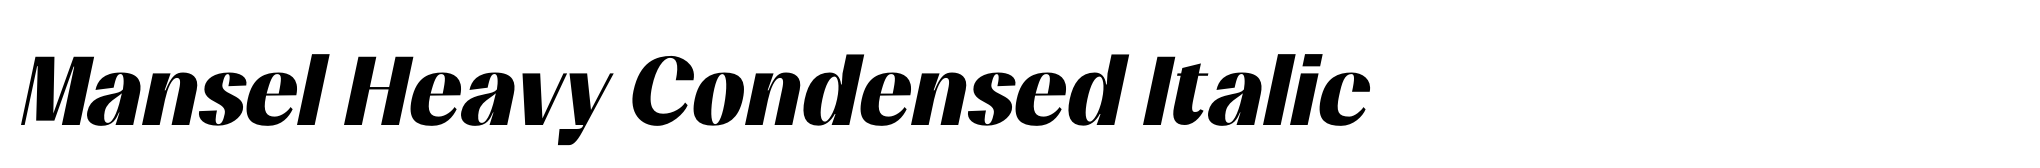 Mansel Heavy Condensed Italic image